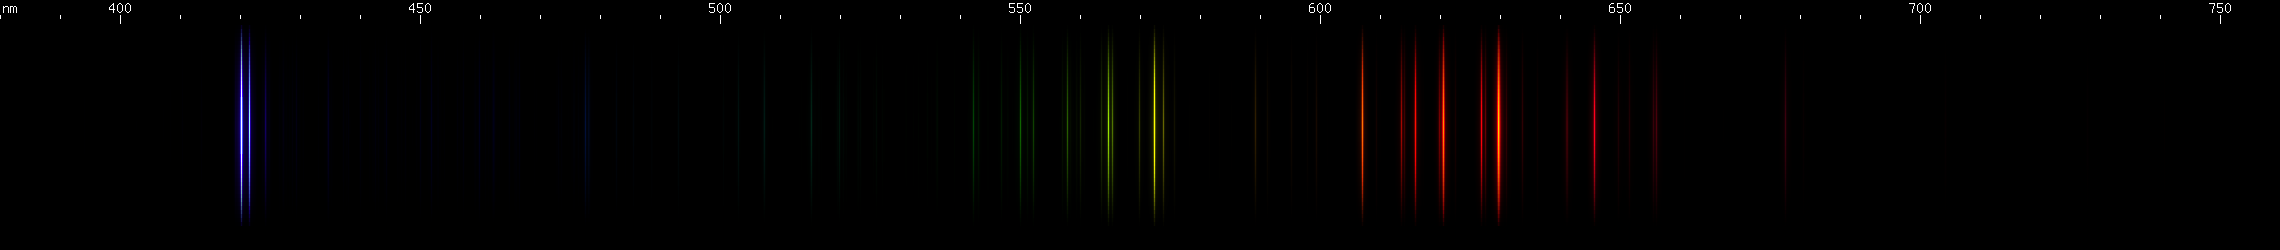 Spectral Lines of Rubidium